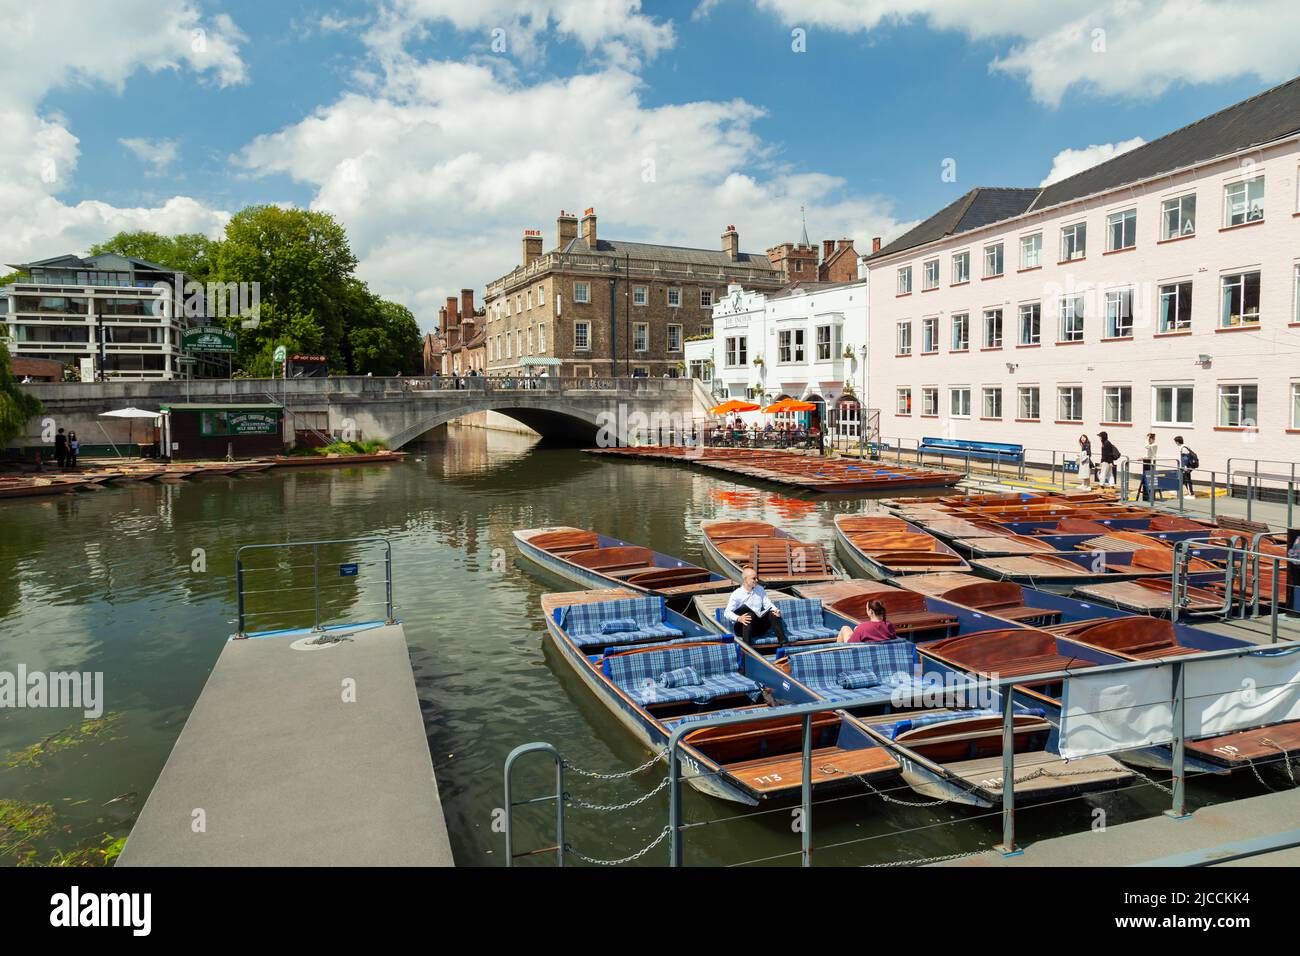 Schlagboote auf dem River Cam in Cambridge, England. Stockfoto